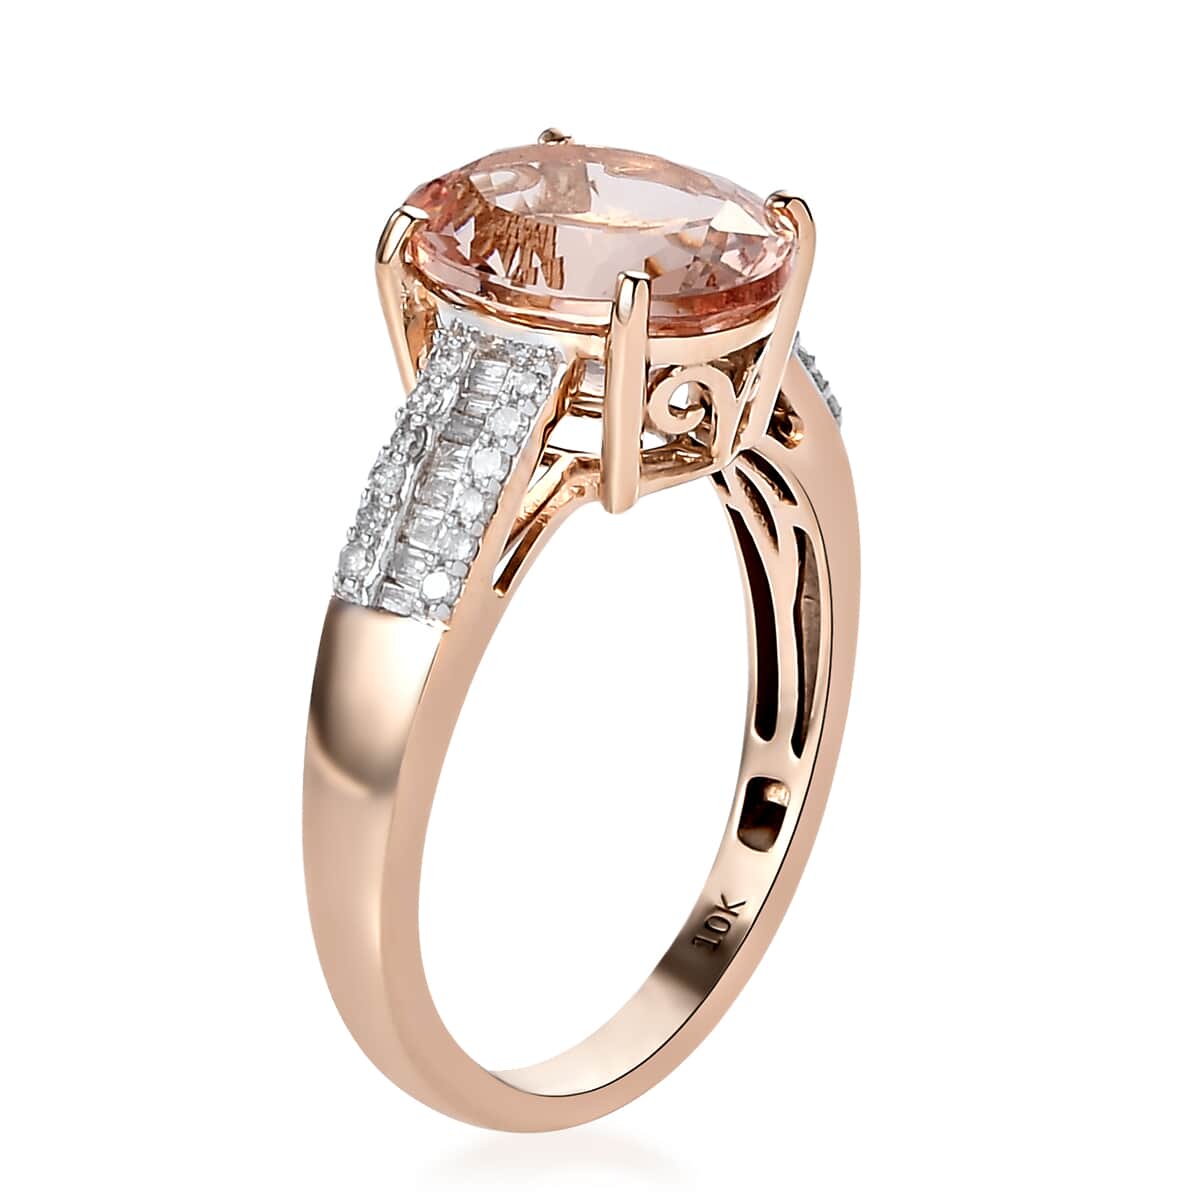 Luxoro 10K Rose Gold Premium Marropino Morganite and Diamond Ring (Size 7.0) 3.40 ctw image number 3